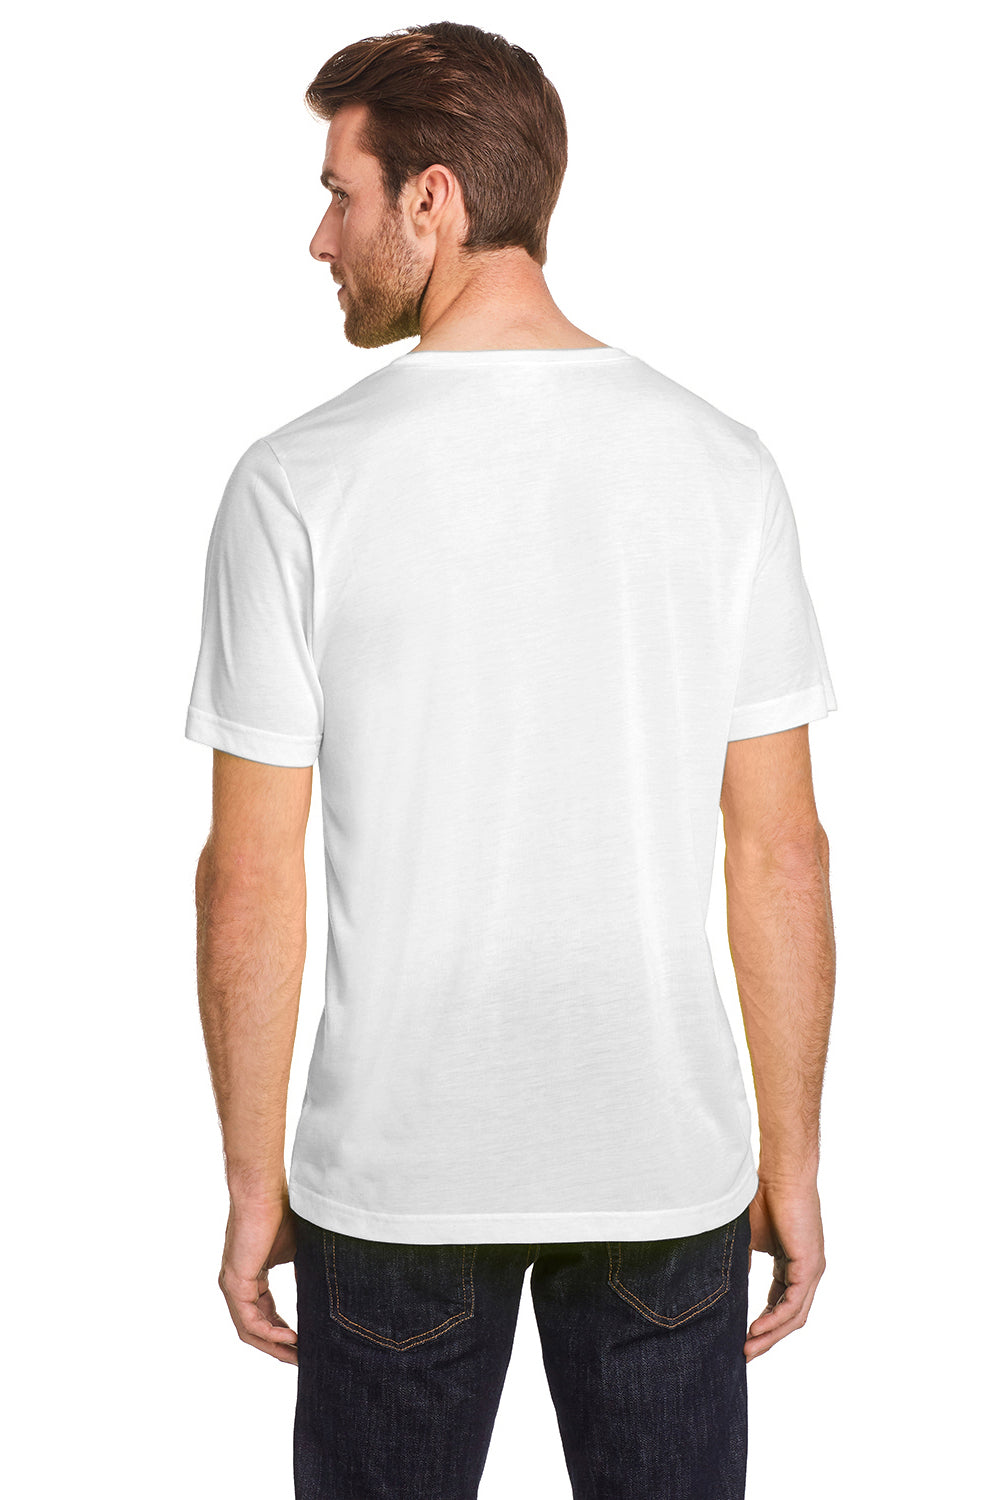 Core 365 CE111 Mens Fusion ChromaSoft Performance Moisture Wicking Short Sleeve Crewneck T-Shirt White Back